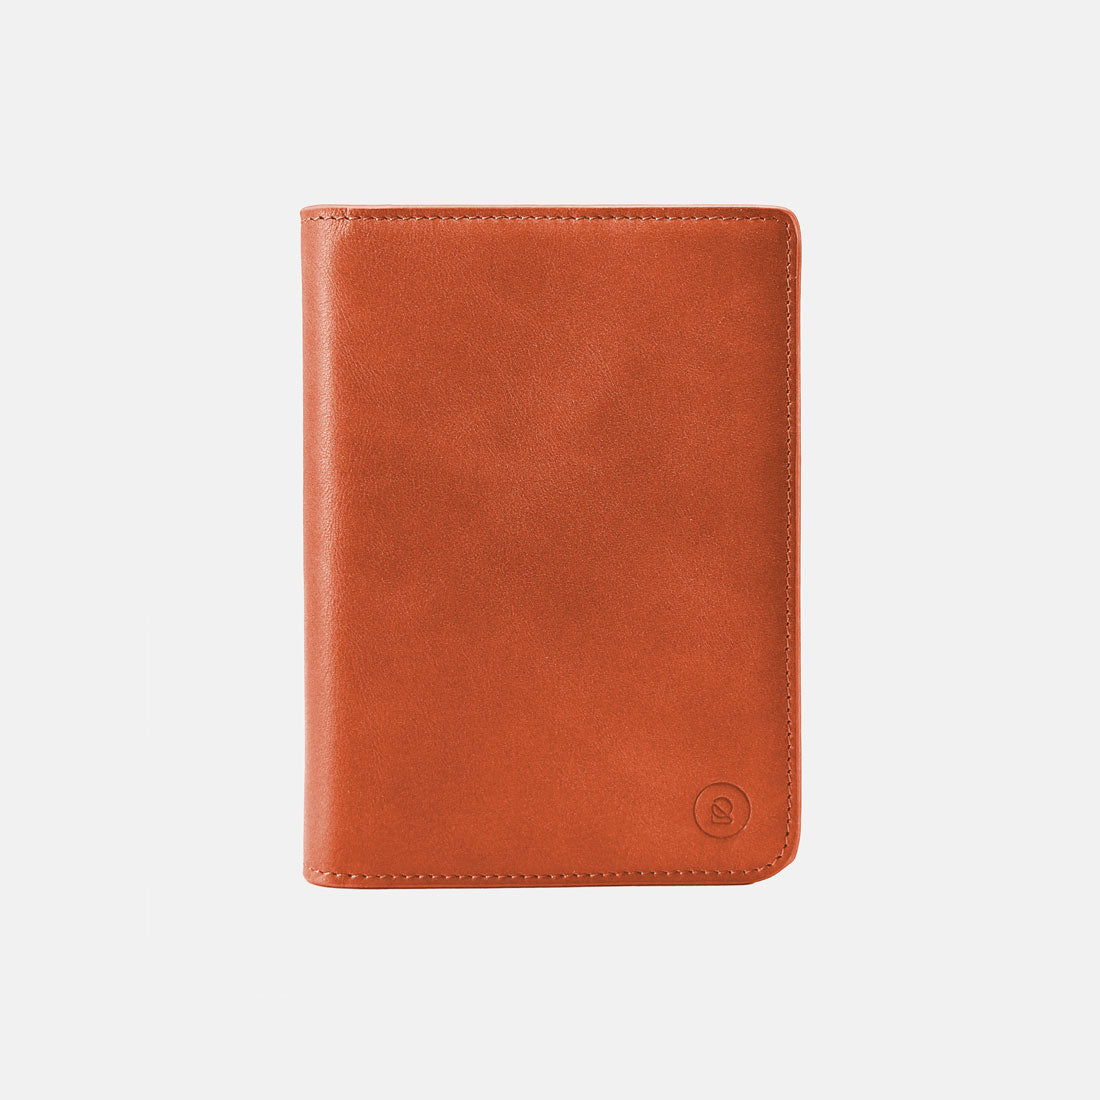 Premium Leather Passport Holder - Travel Essentials - Saddle Brown